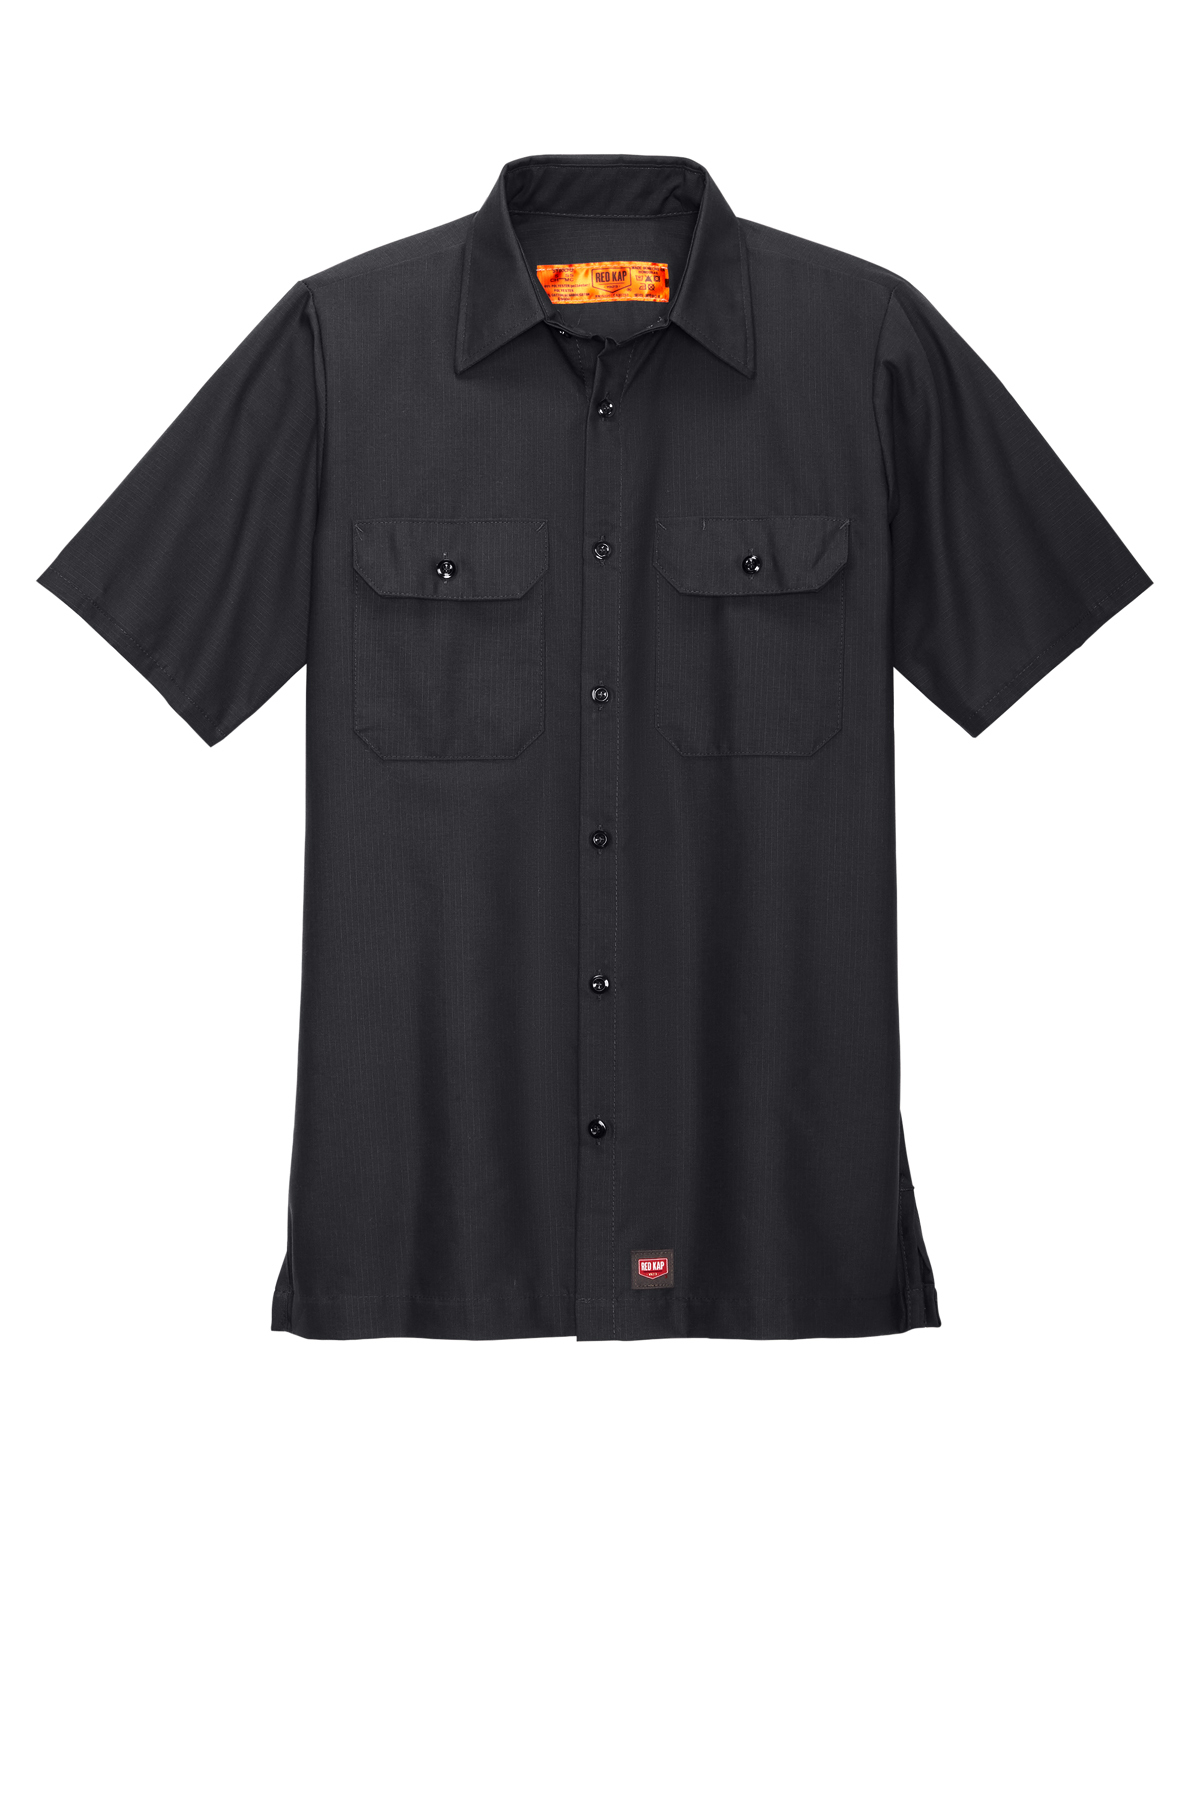 Red Kap ® Short Sleeve Solid Ripstop Shirt | Product | SanMar